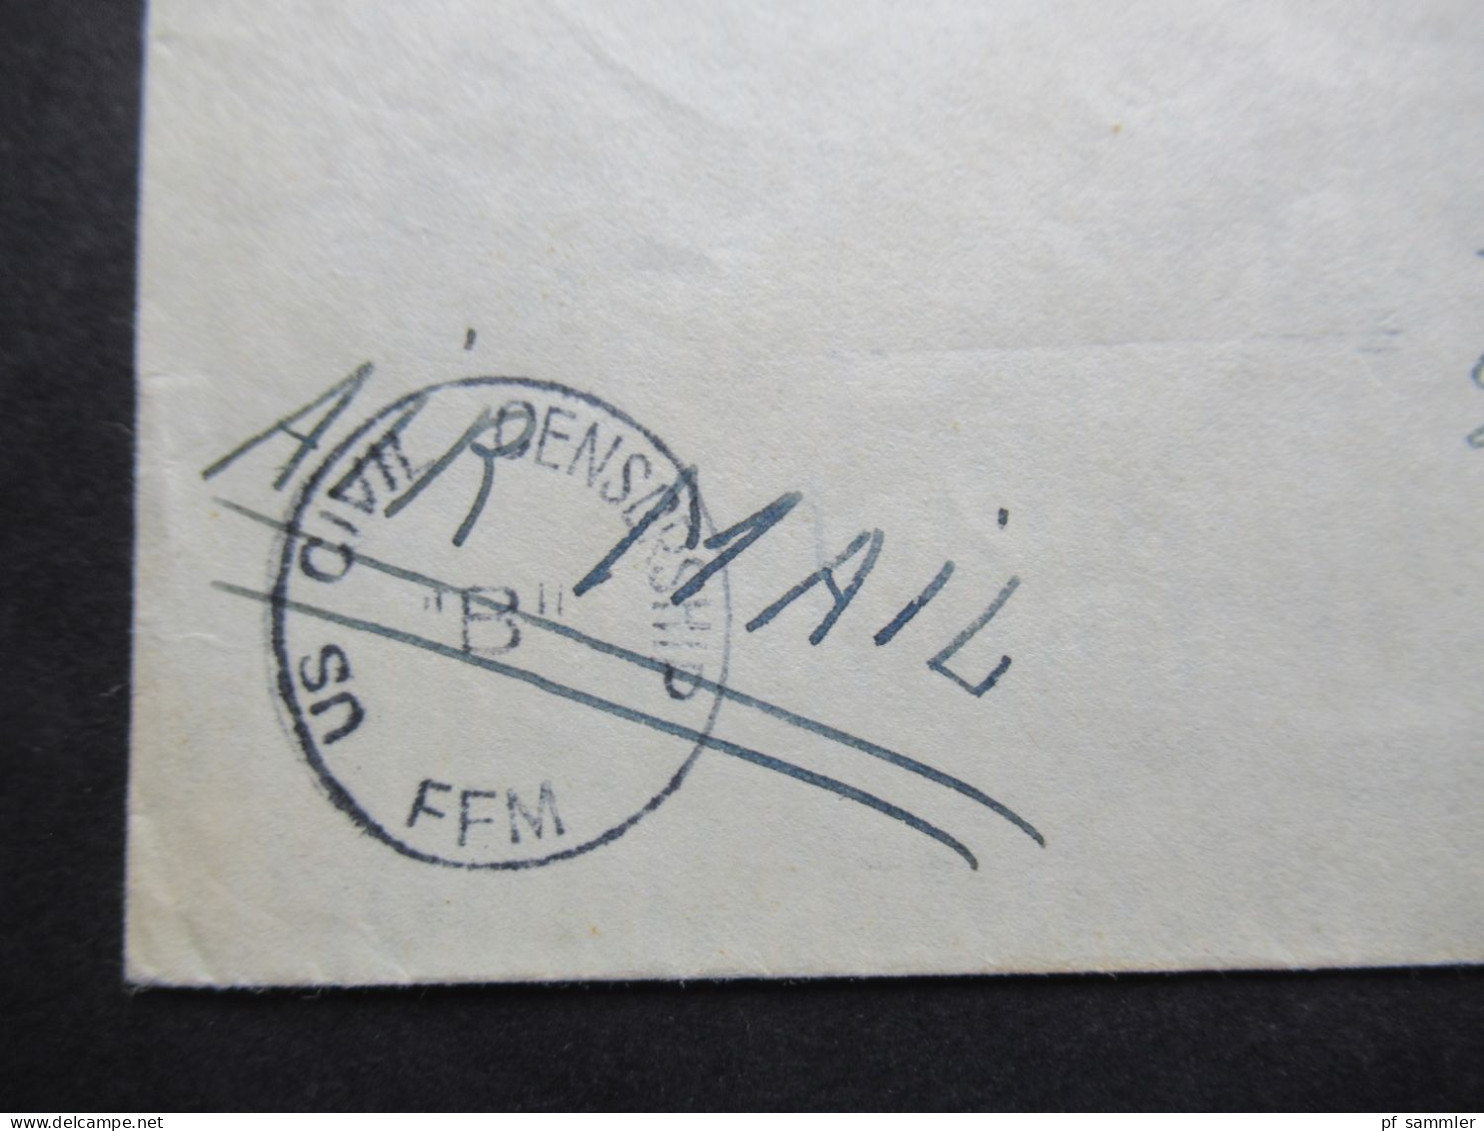 USA 1947 Luftpost Zensurbeleg / Stempel US Civil Censorship "B" FFM / Chicaco Ill. Irving Parks Sta. Nach Stuttgart 13 - Covers & Documents